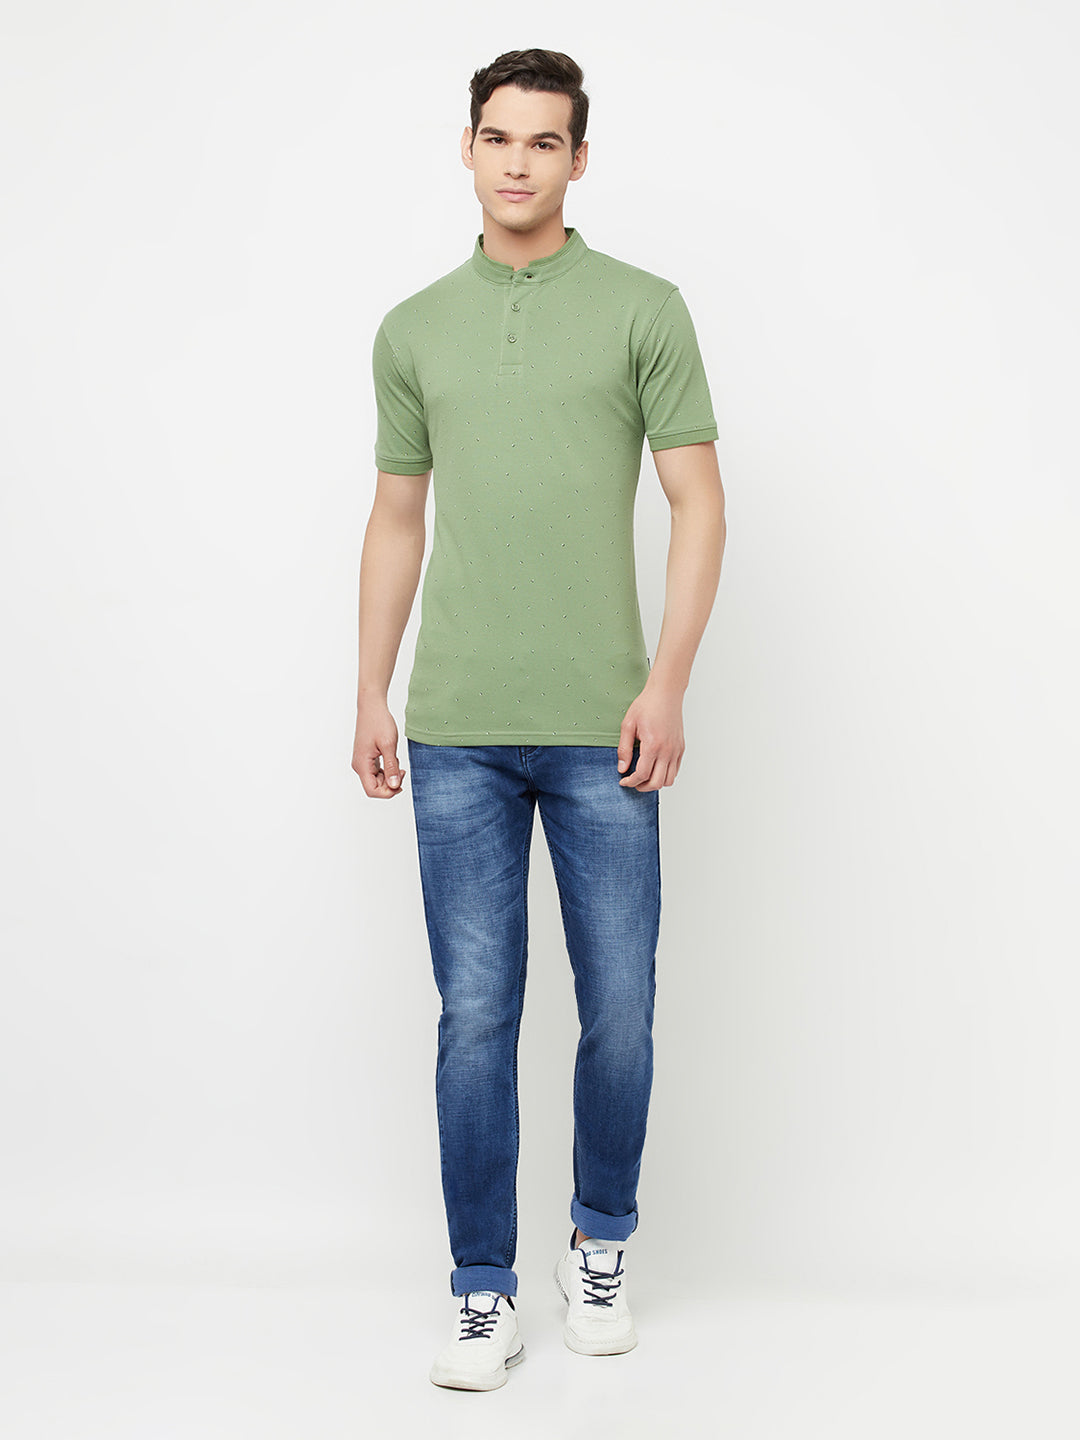 Olive Printed Mandarin Collar T-Shirt - Men T-Shirts